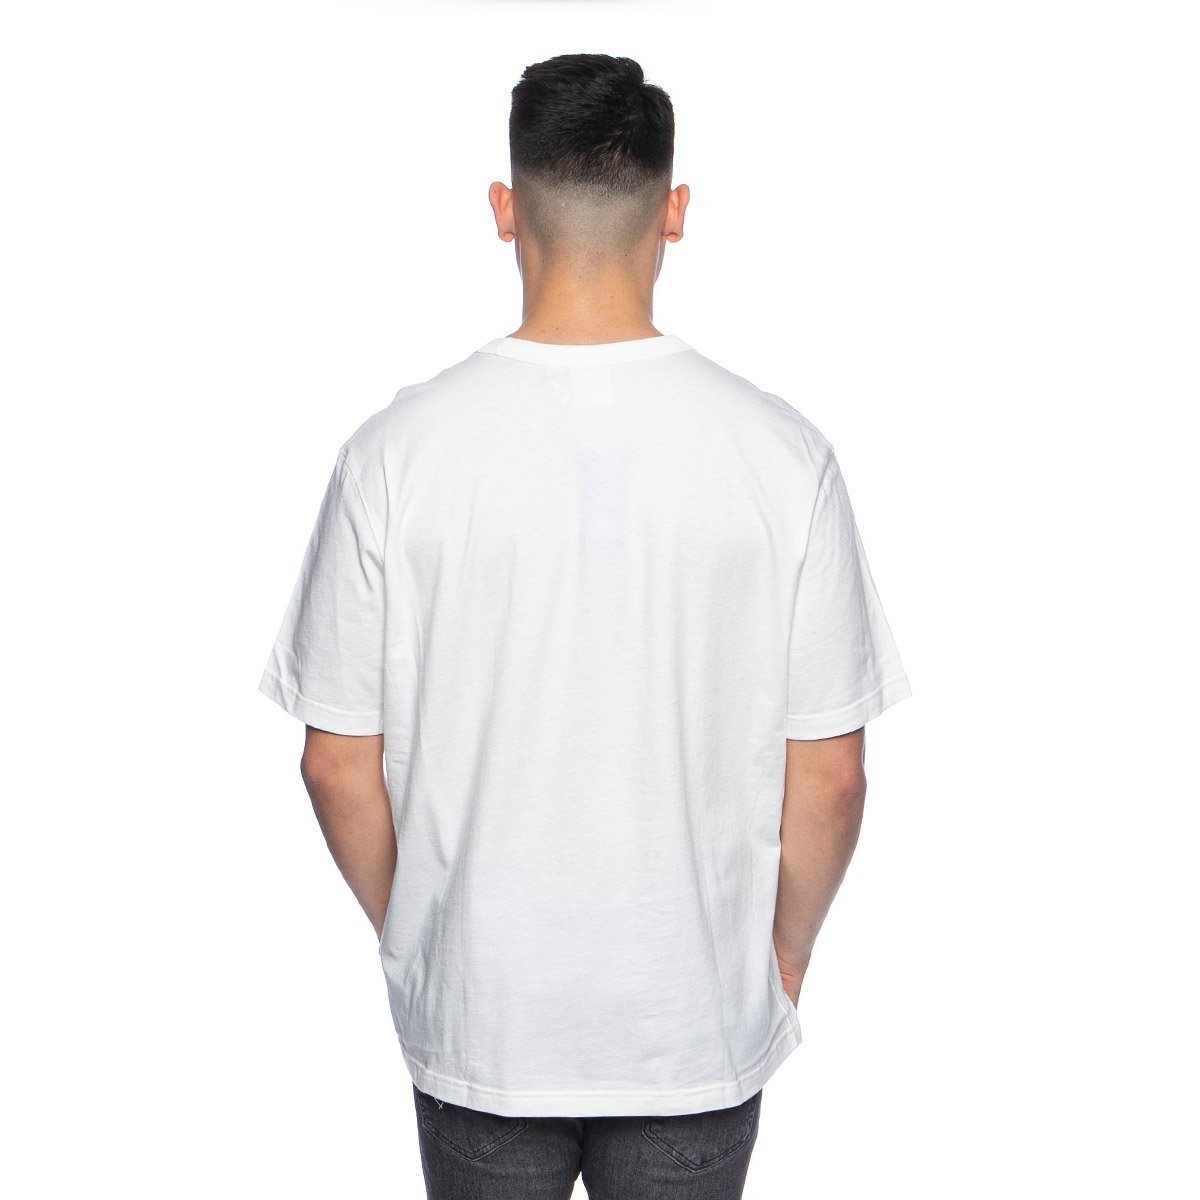 T-shirt Adidas Originals Message LG Tee core white | Bludshop.com